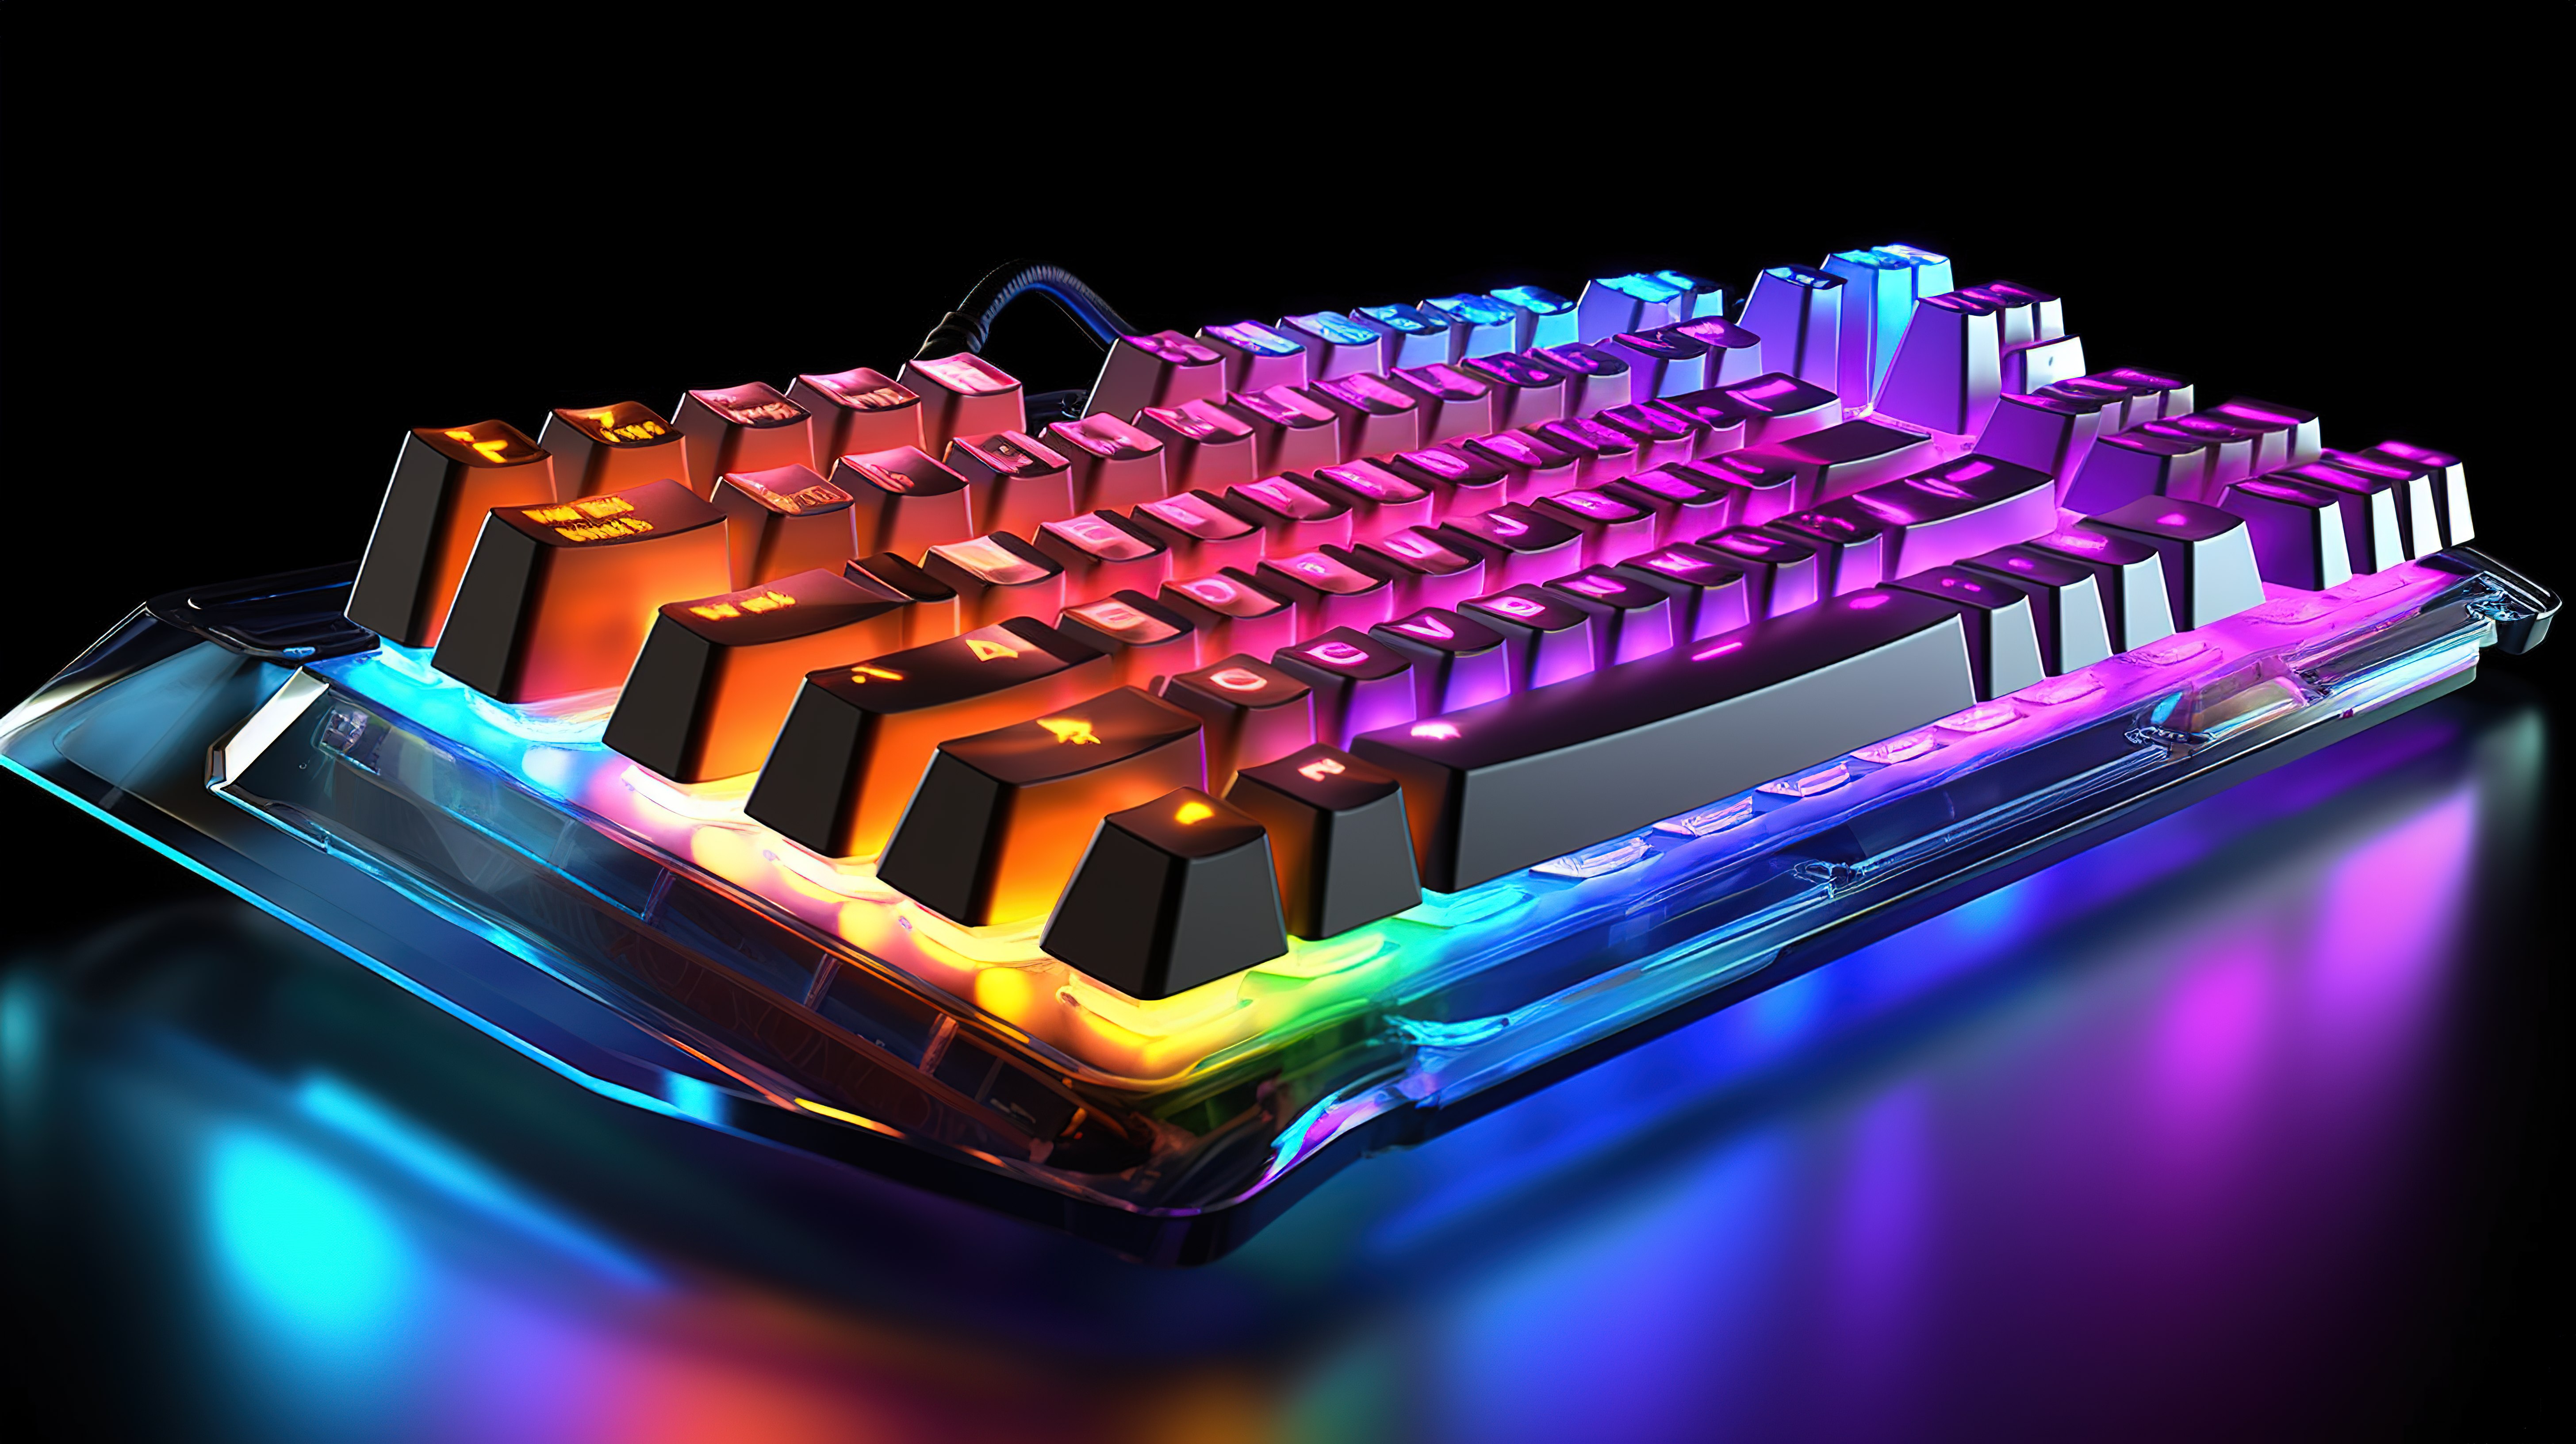 RGB 发光游戏键盘和 3D 渲染电脑机箱，打造终极游戏空间图片